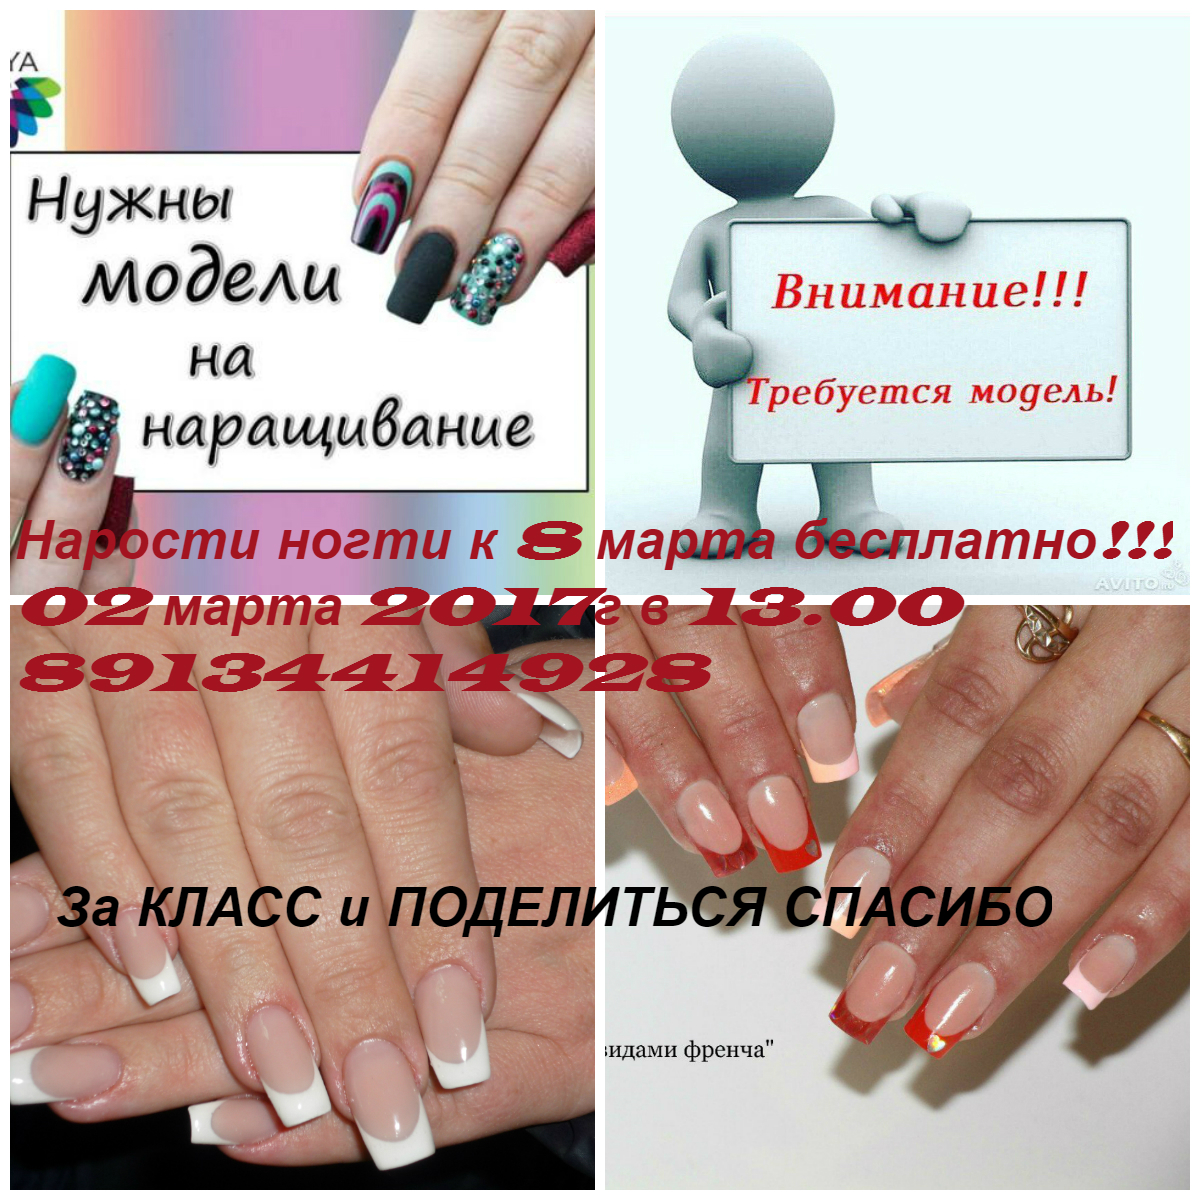 Саяногорск Инфо - collage1.jpg, Скачано: 138